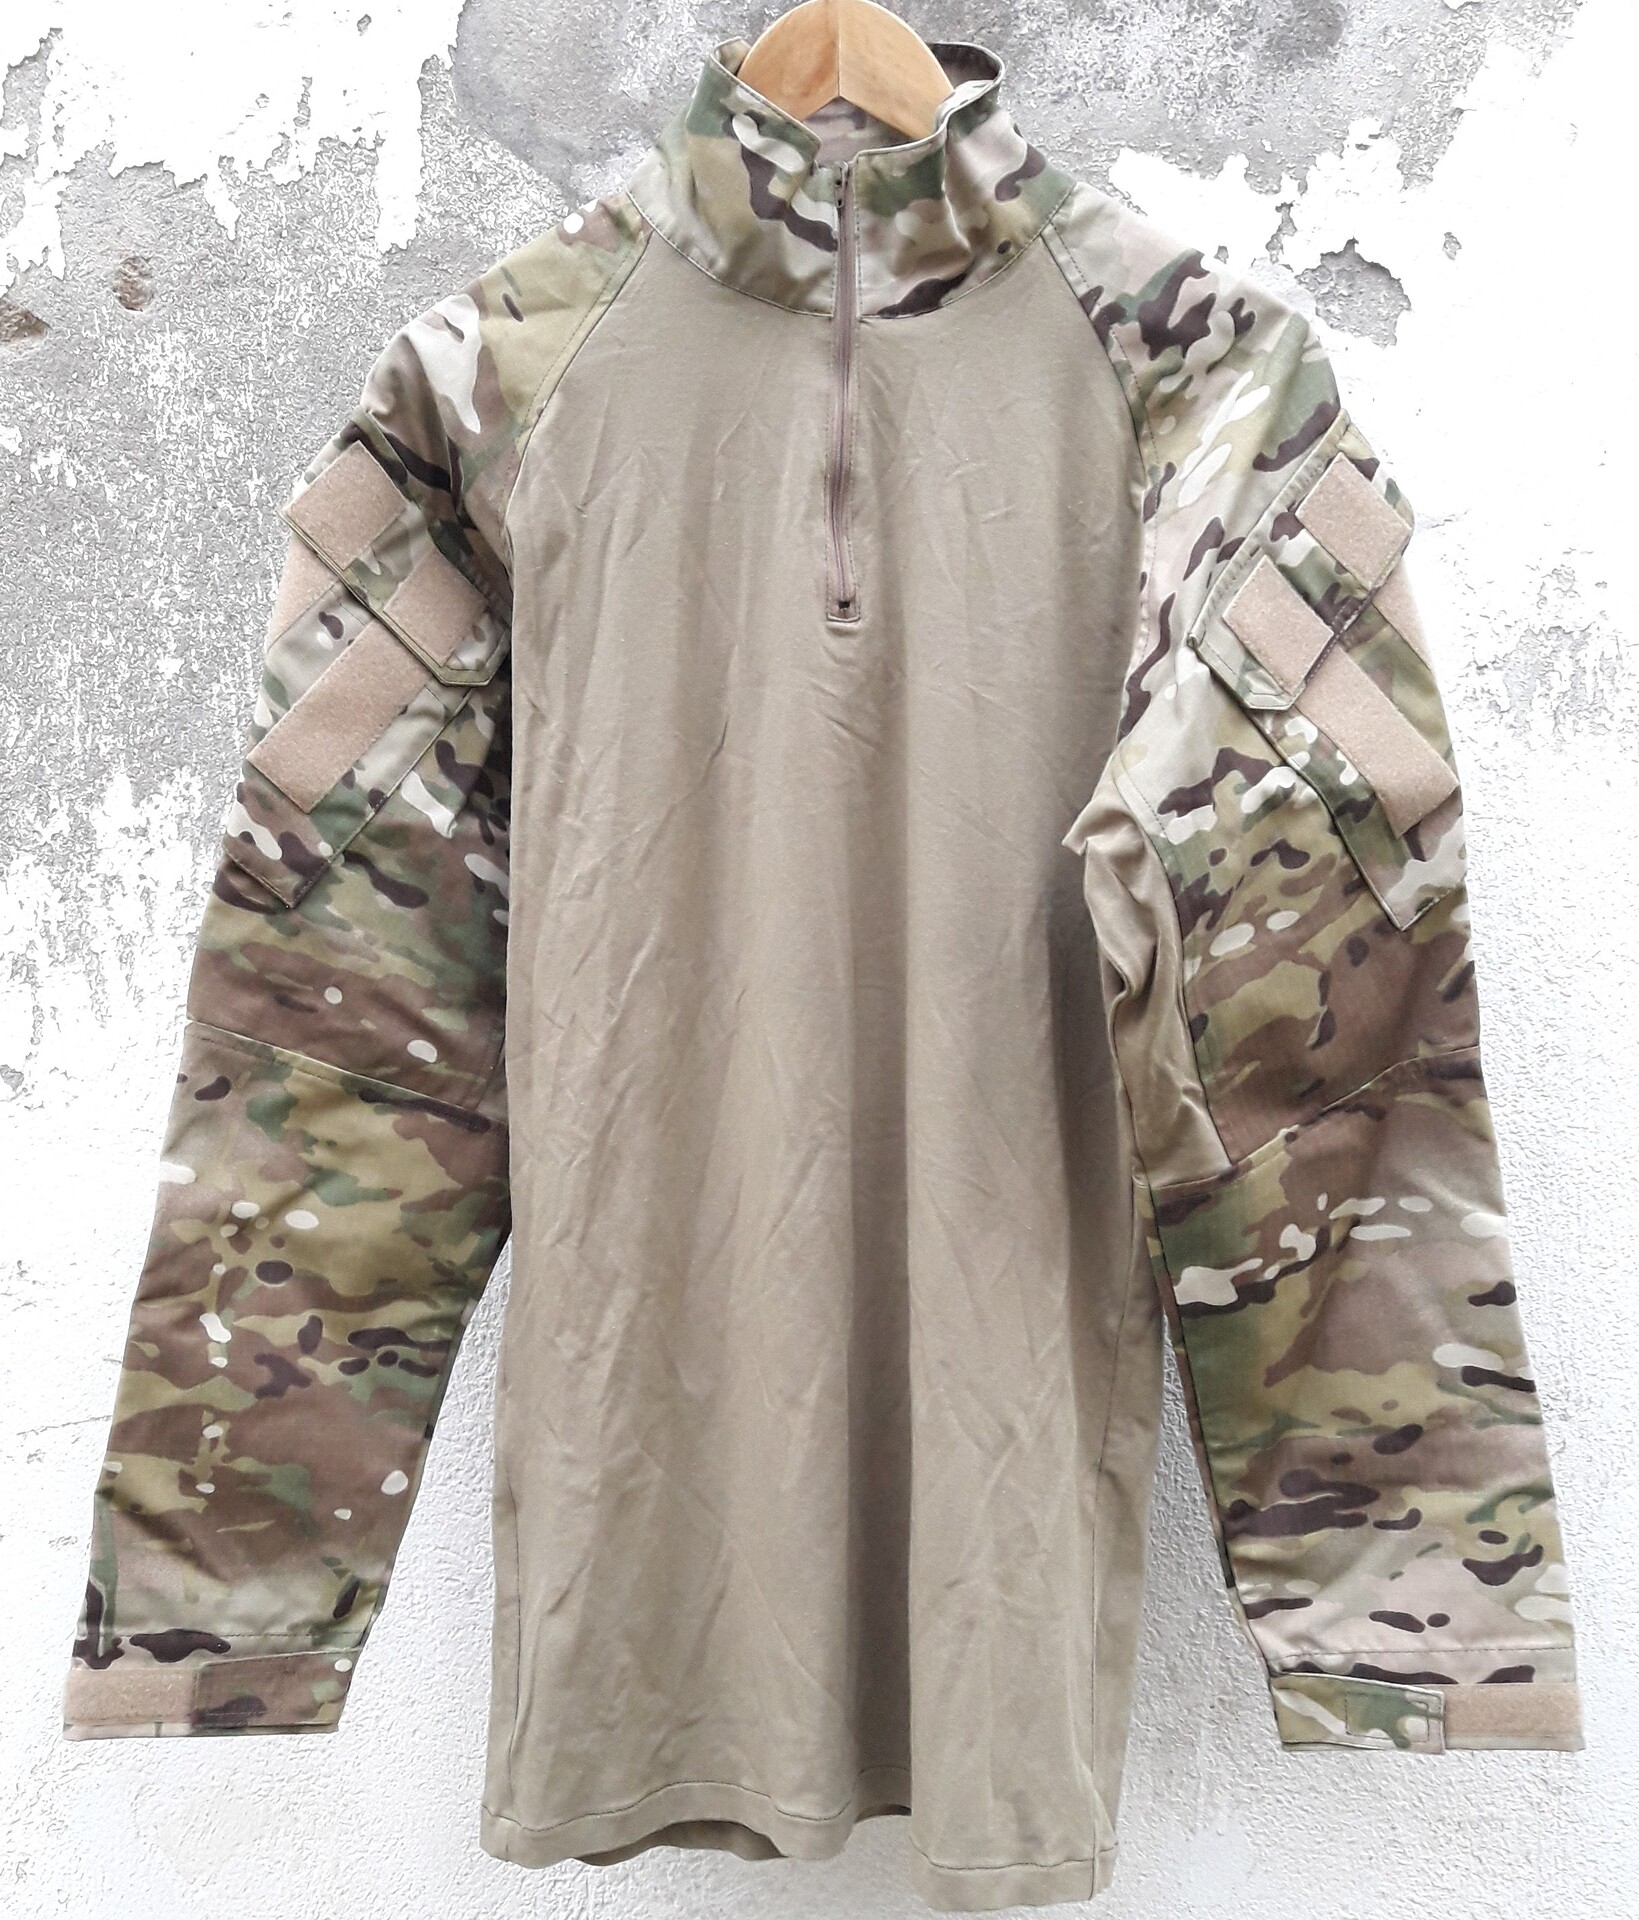 HPE - Bluza combat shirt - L/Regular